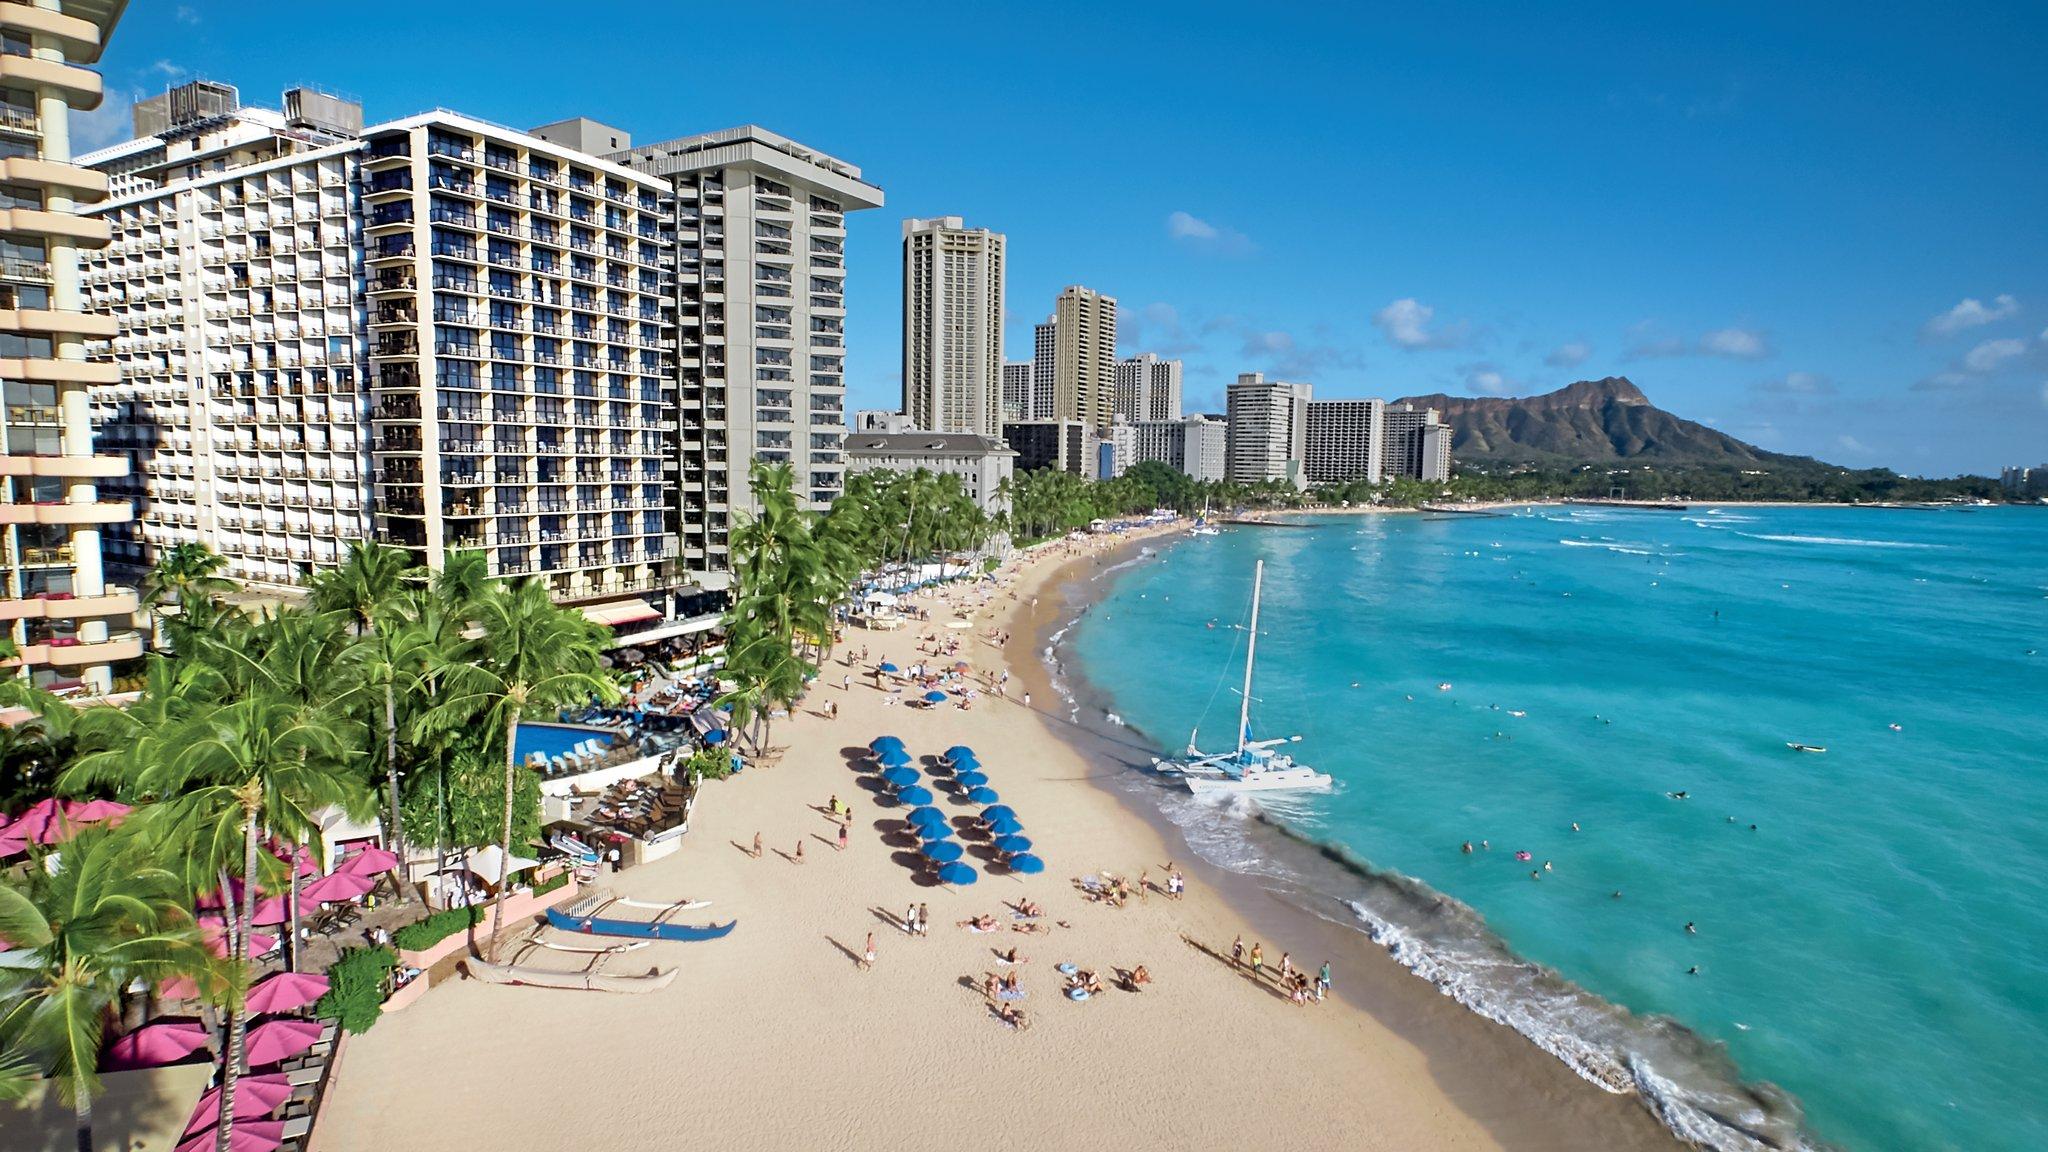 Outrigger Waikiki Beach Resort- First Class Honolulu, HI